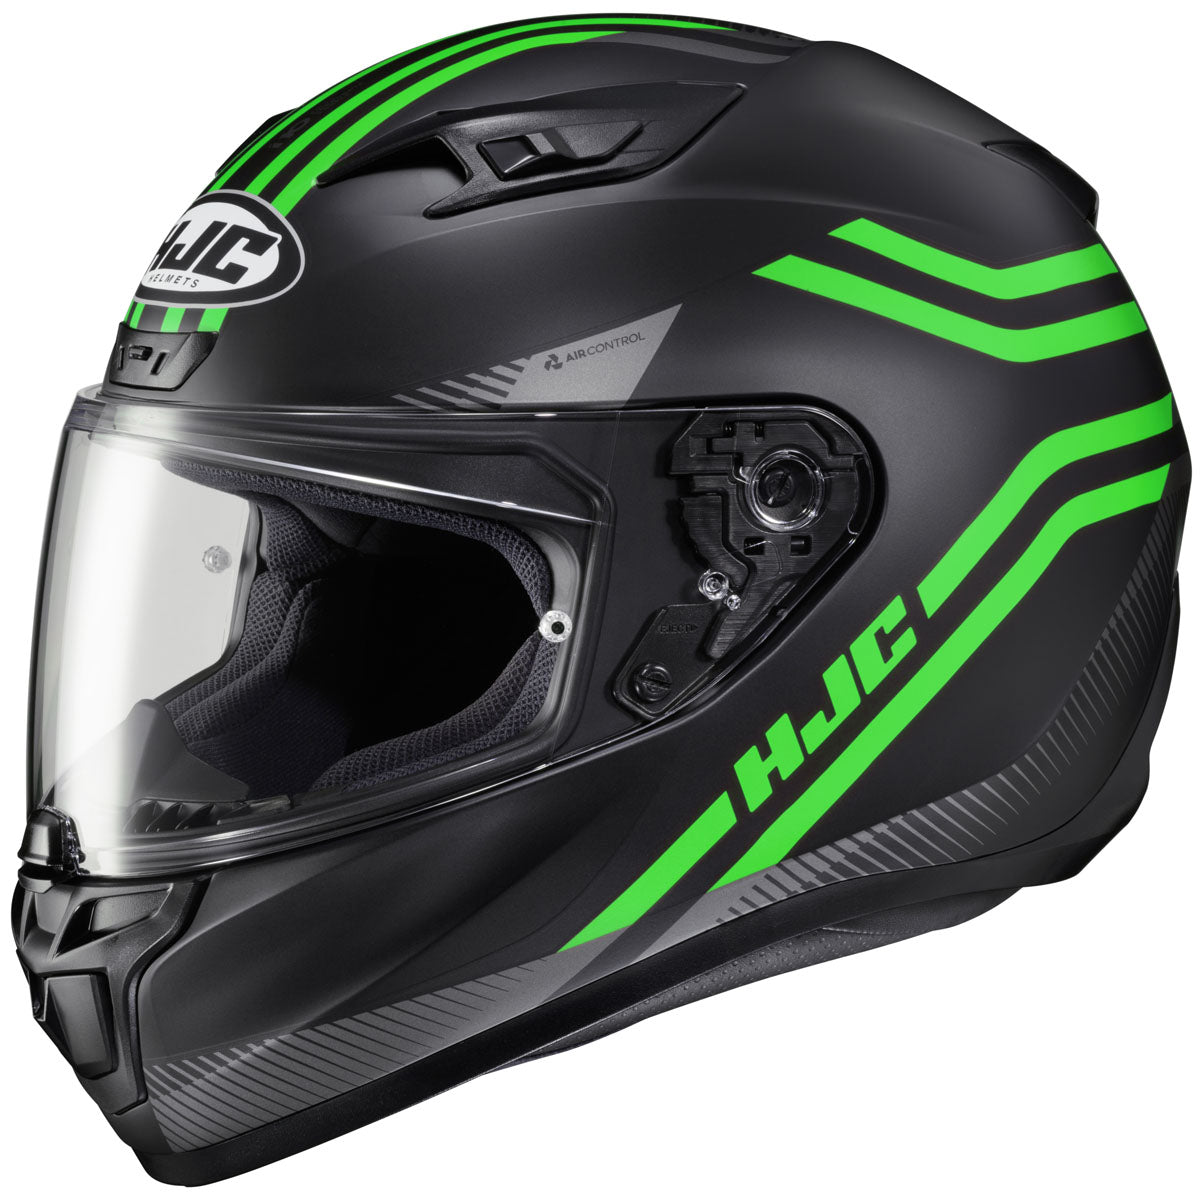 HJC i10 Strix Helmet